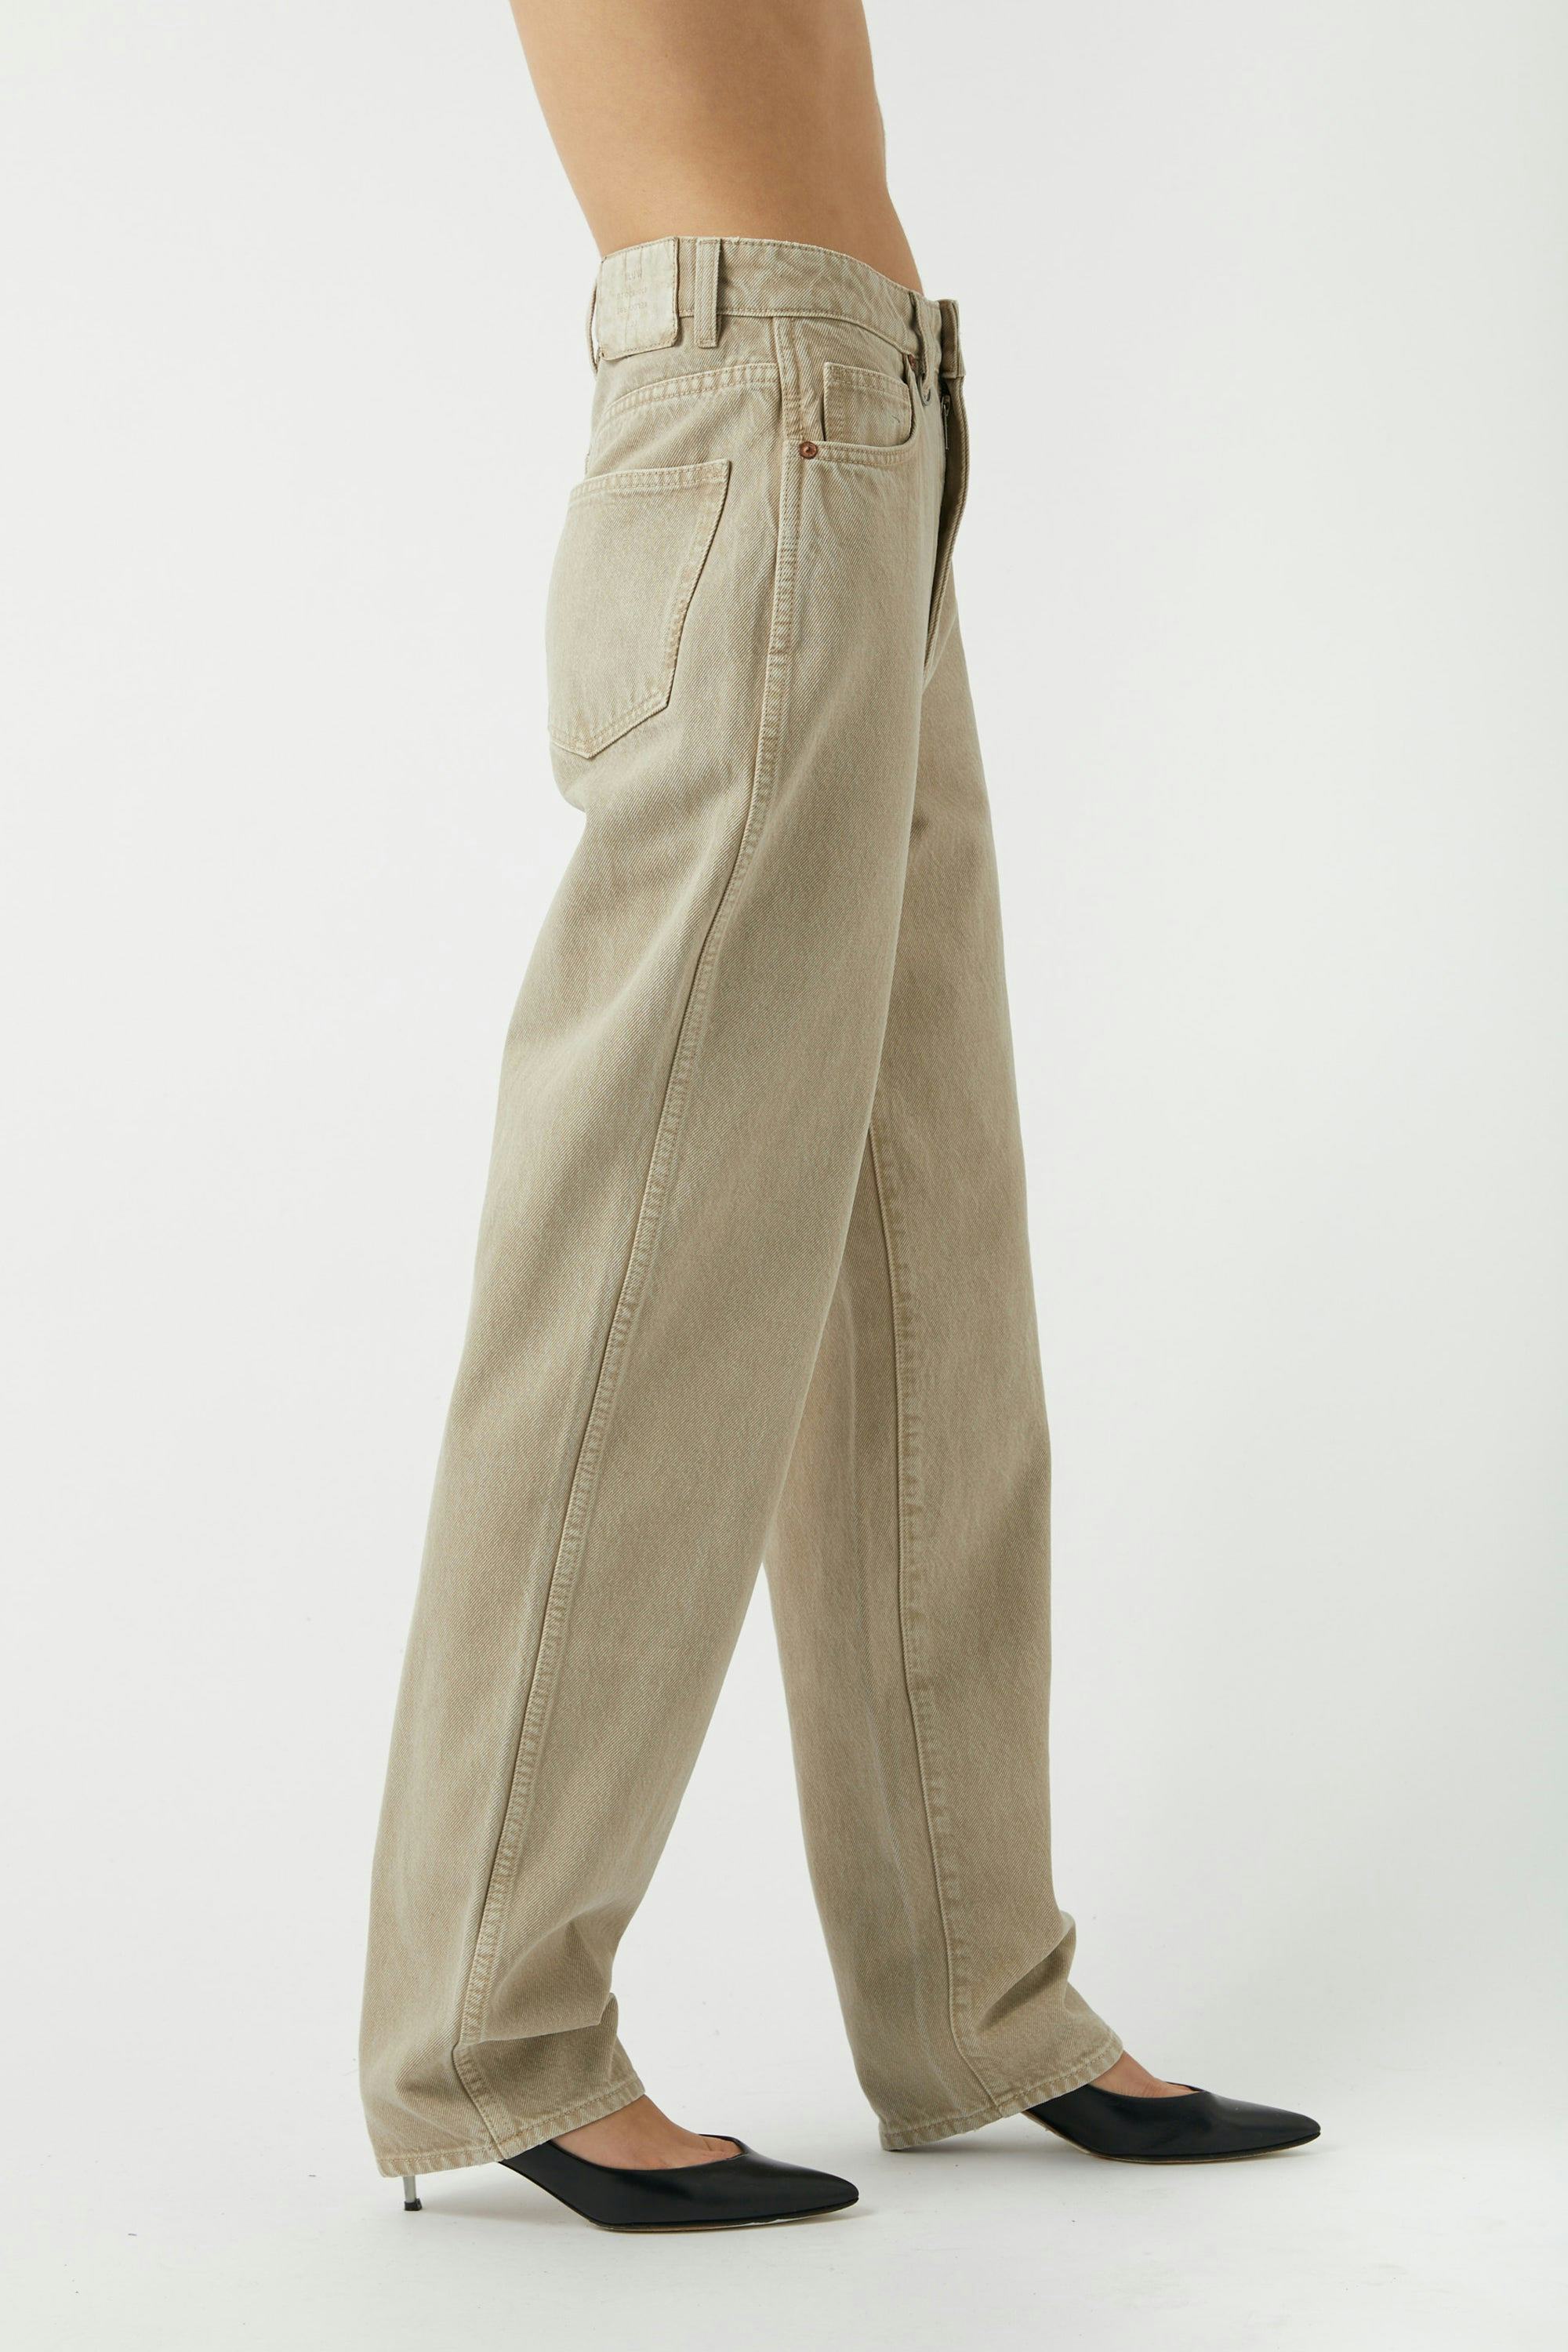 Sade Baggy - Mushroom Neuw light lightbrown womens-jeans 